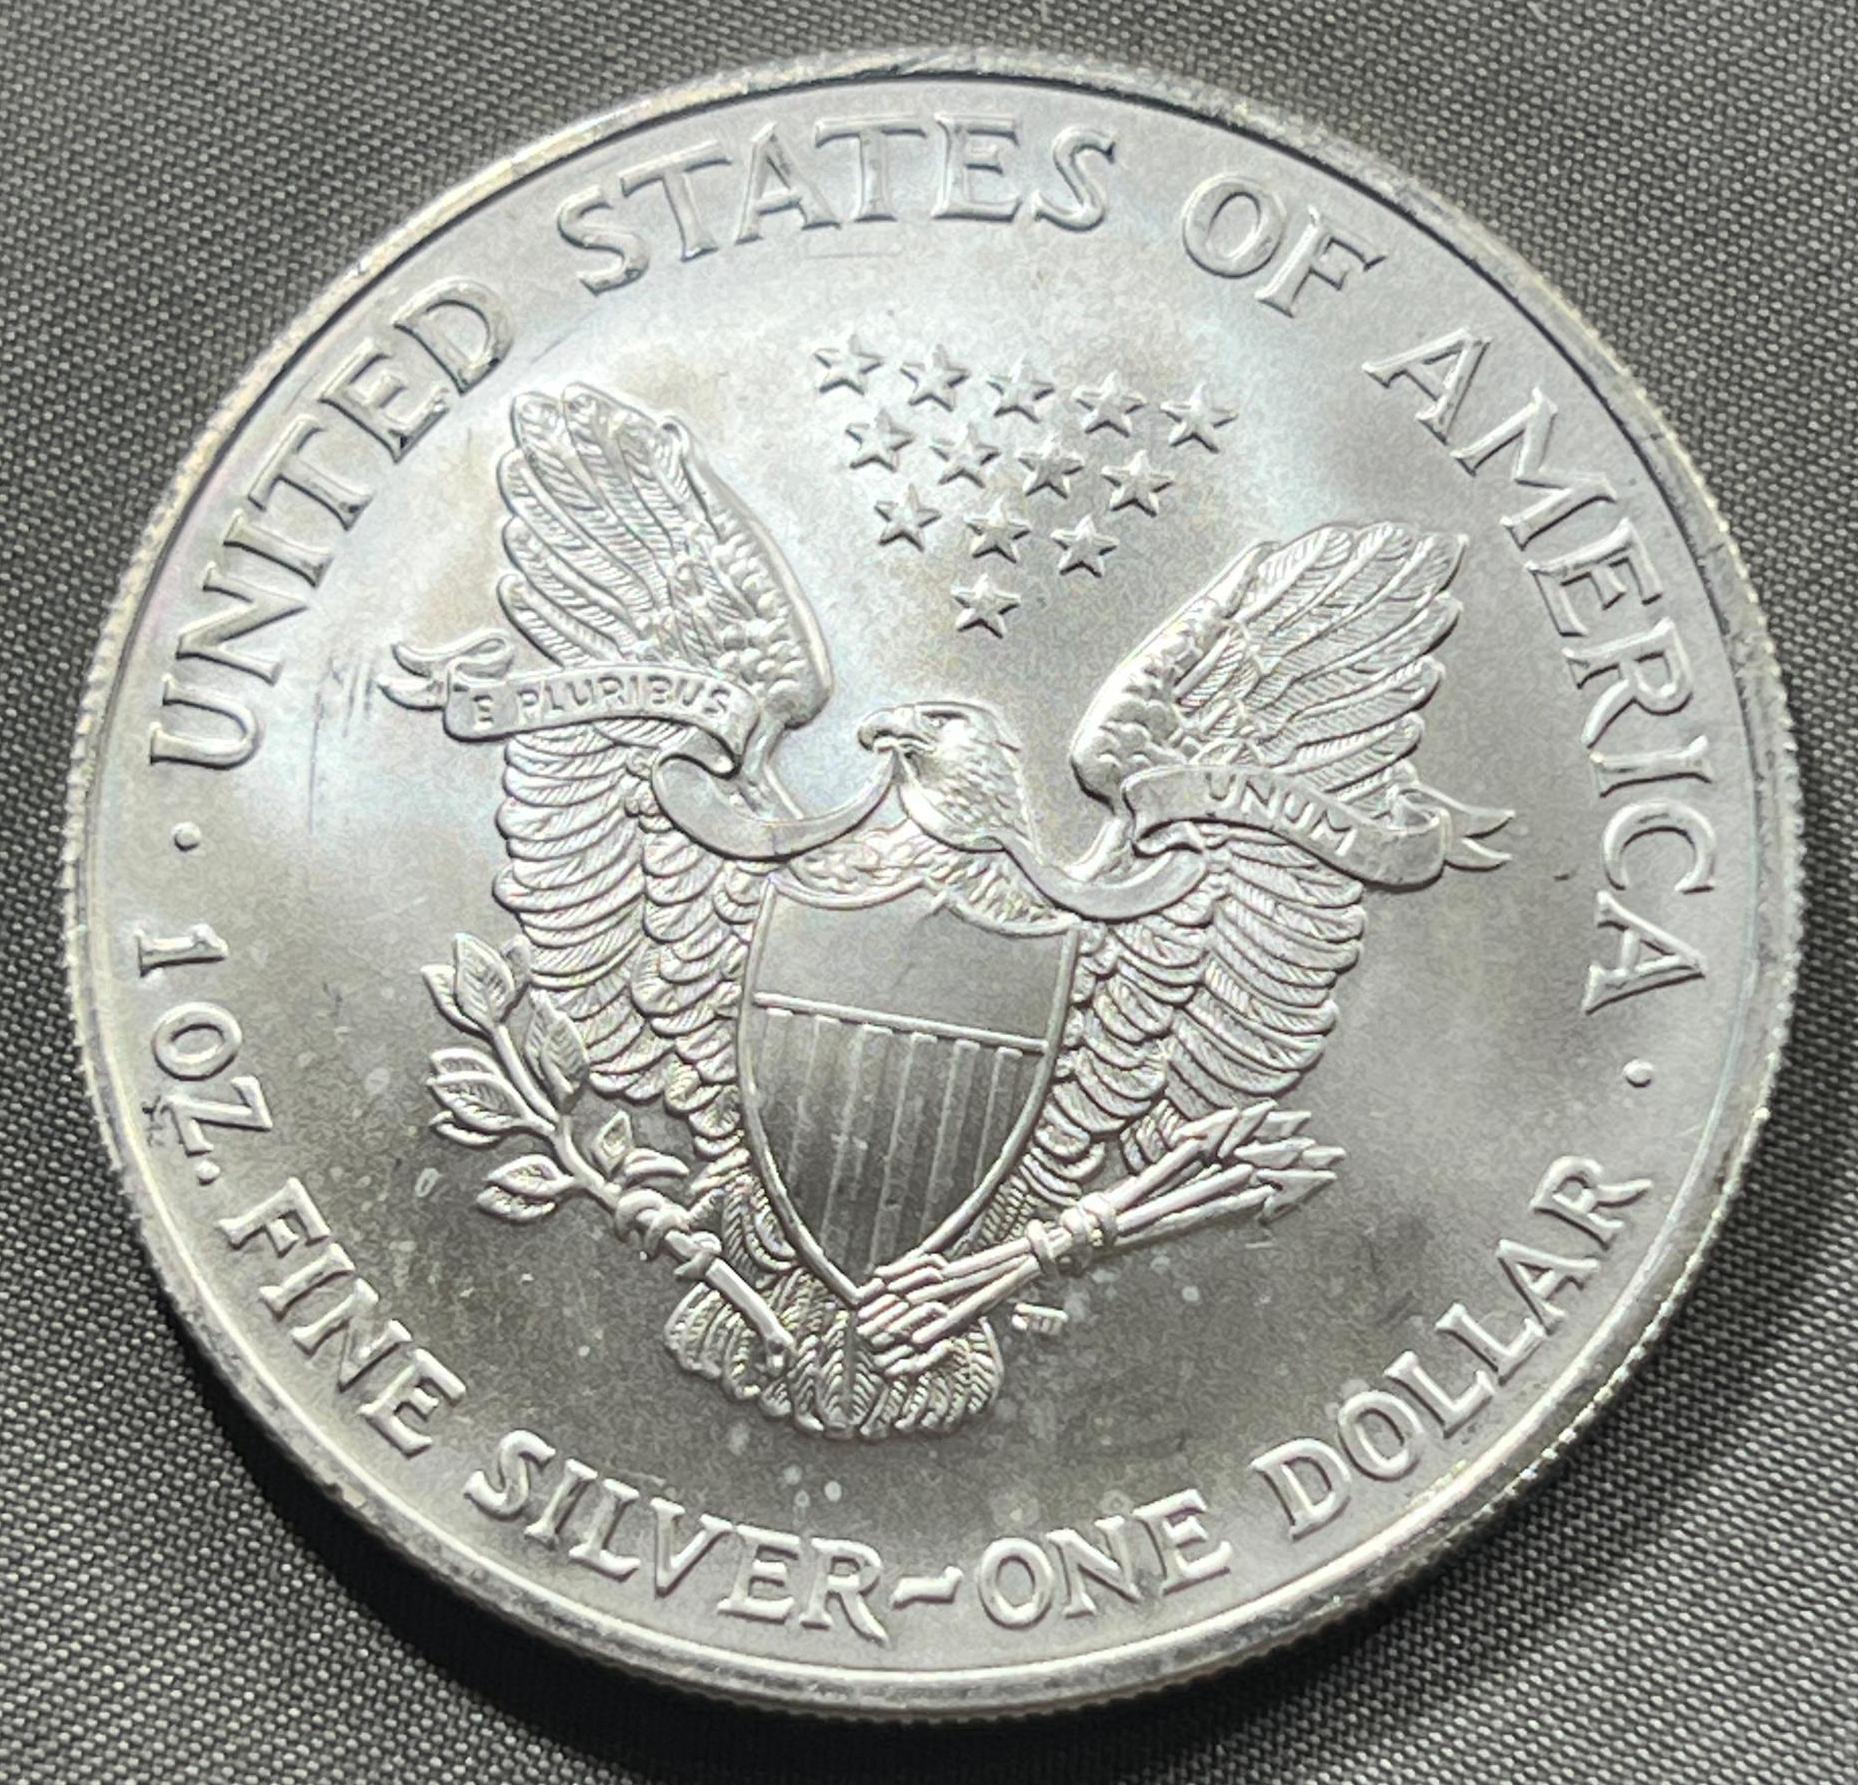 2003 US Silver Eagle Dollar Coin, .999 Fine Silver